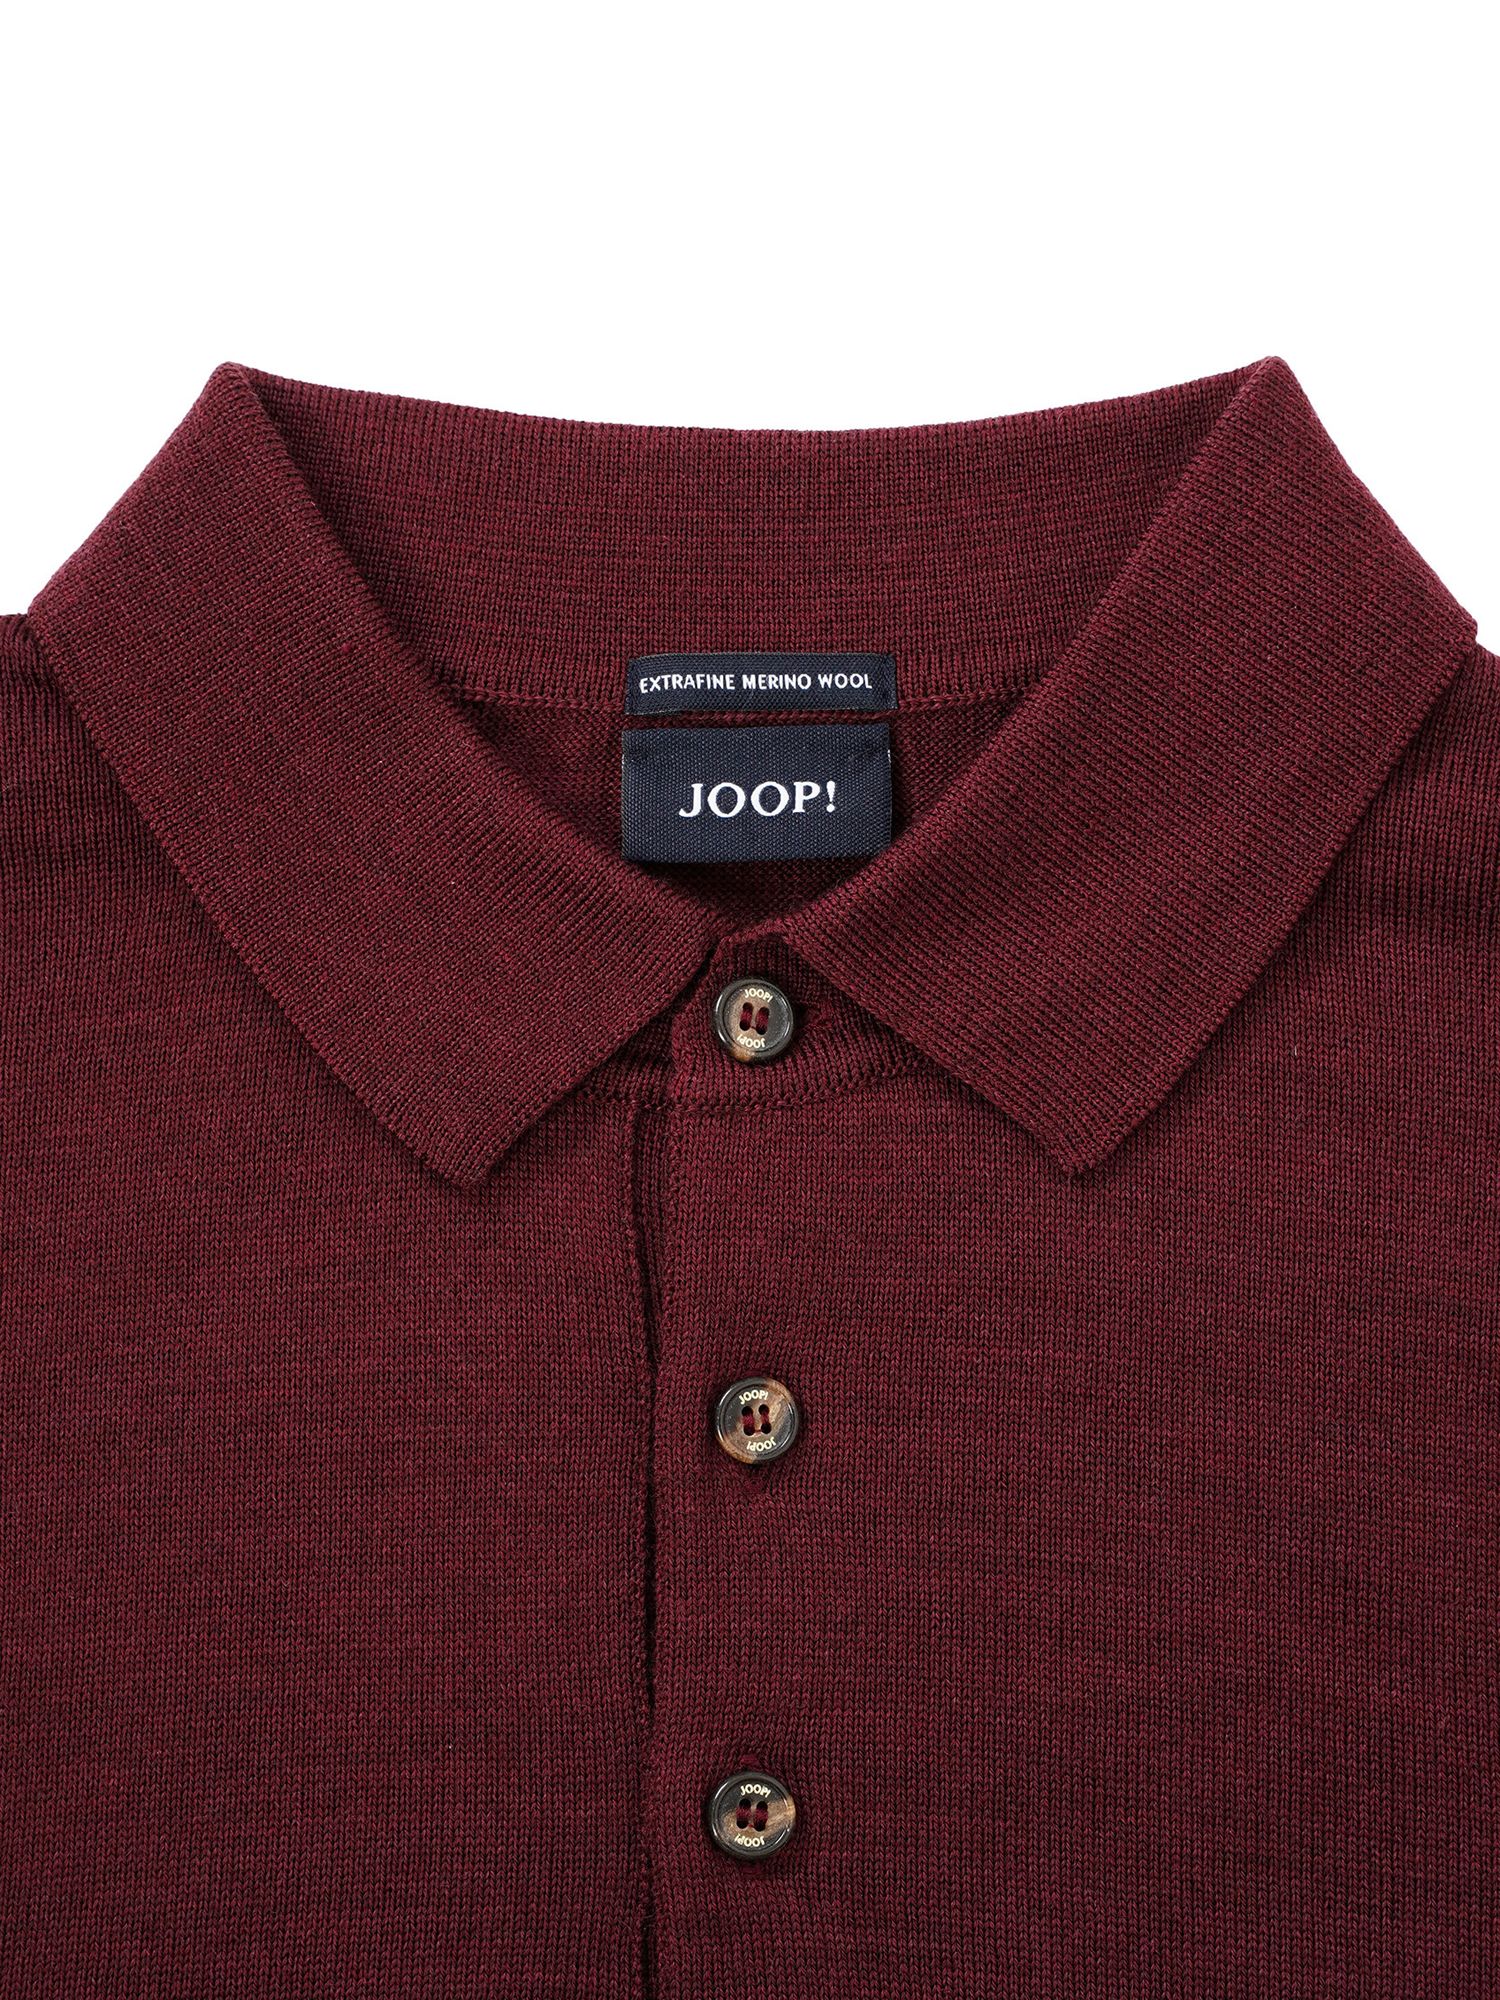 JOOP! Dondo Wool Knitted Jumper, Dark Red, L